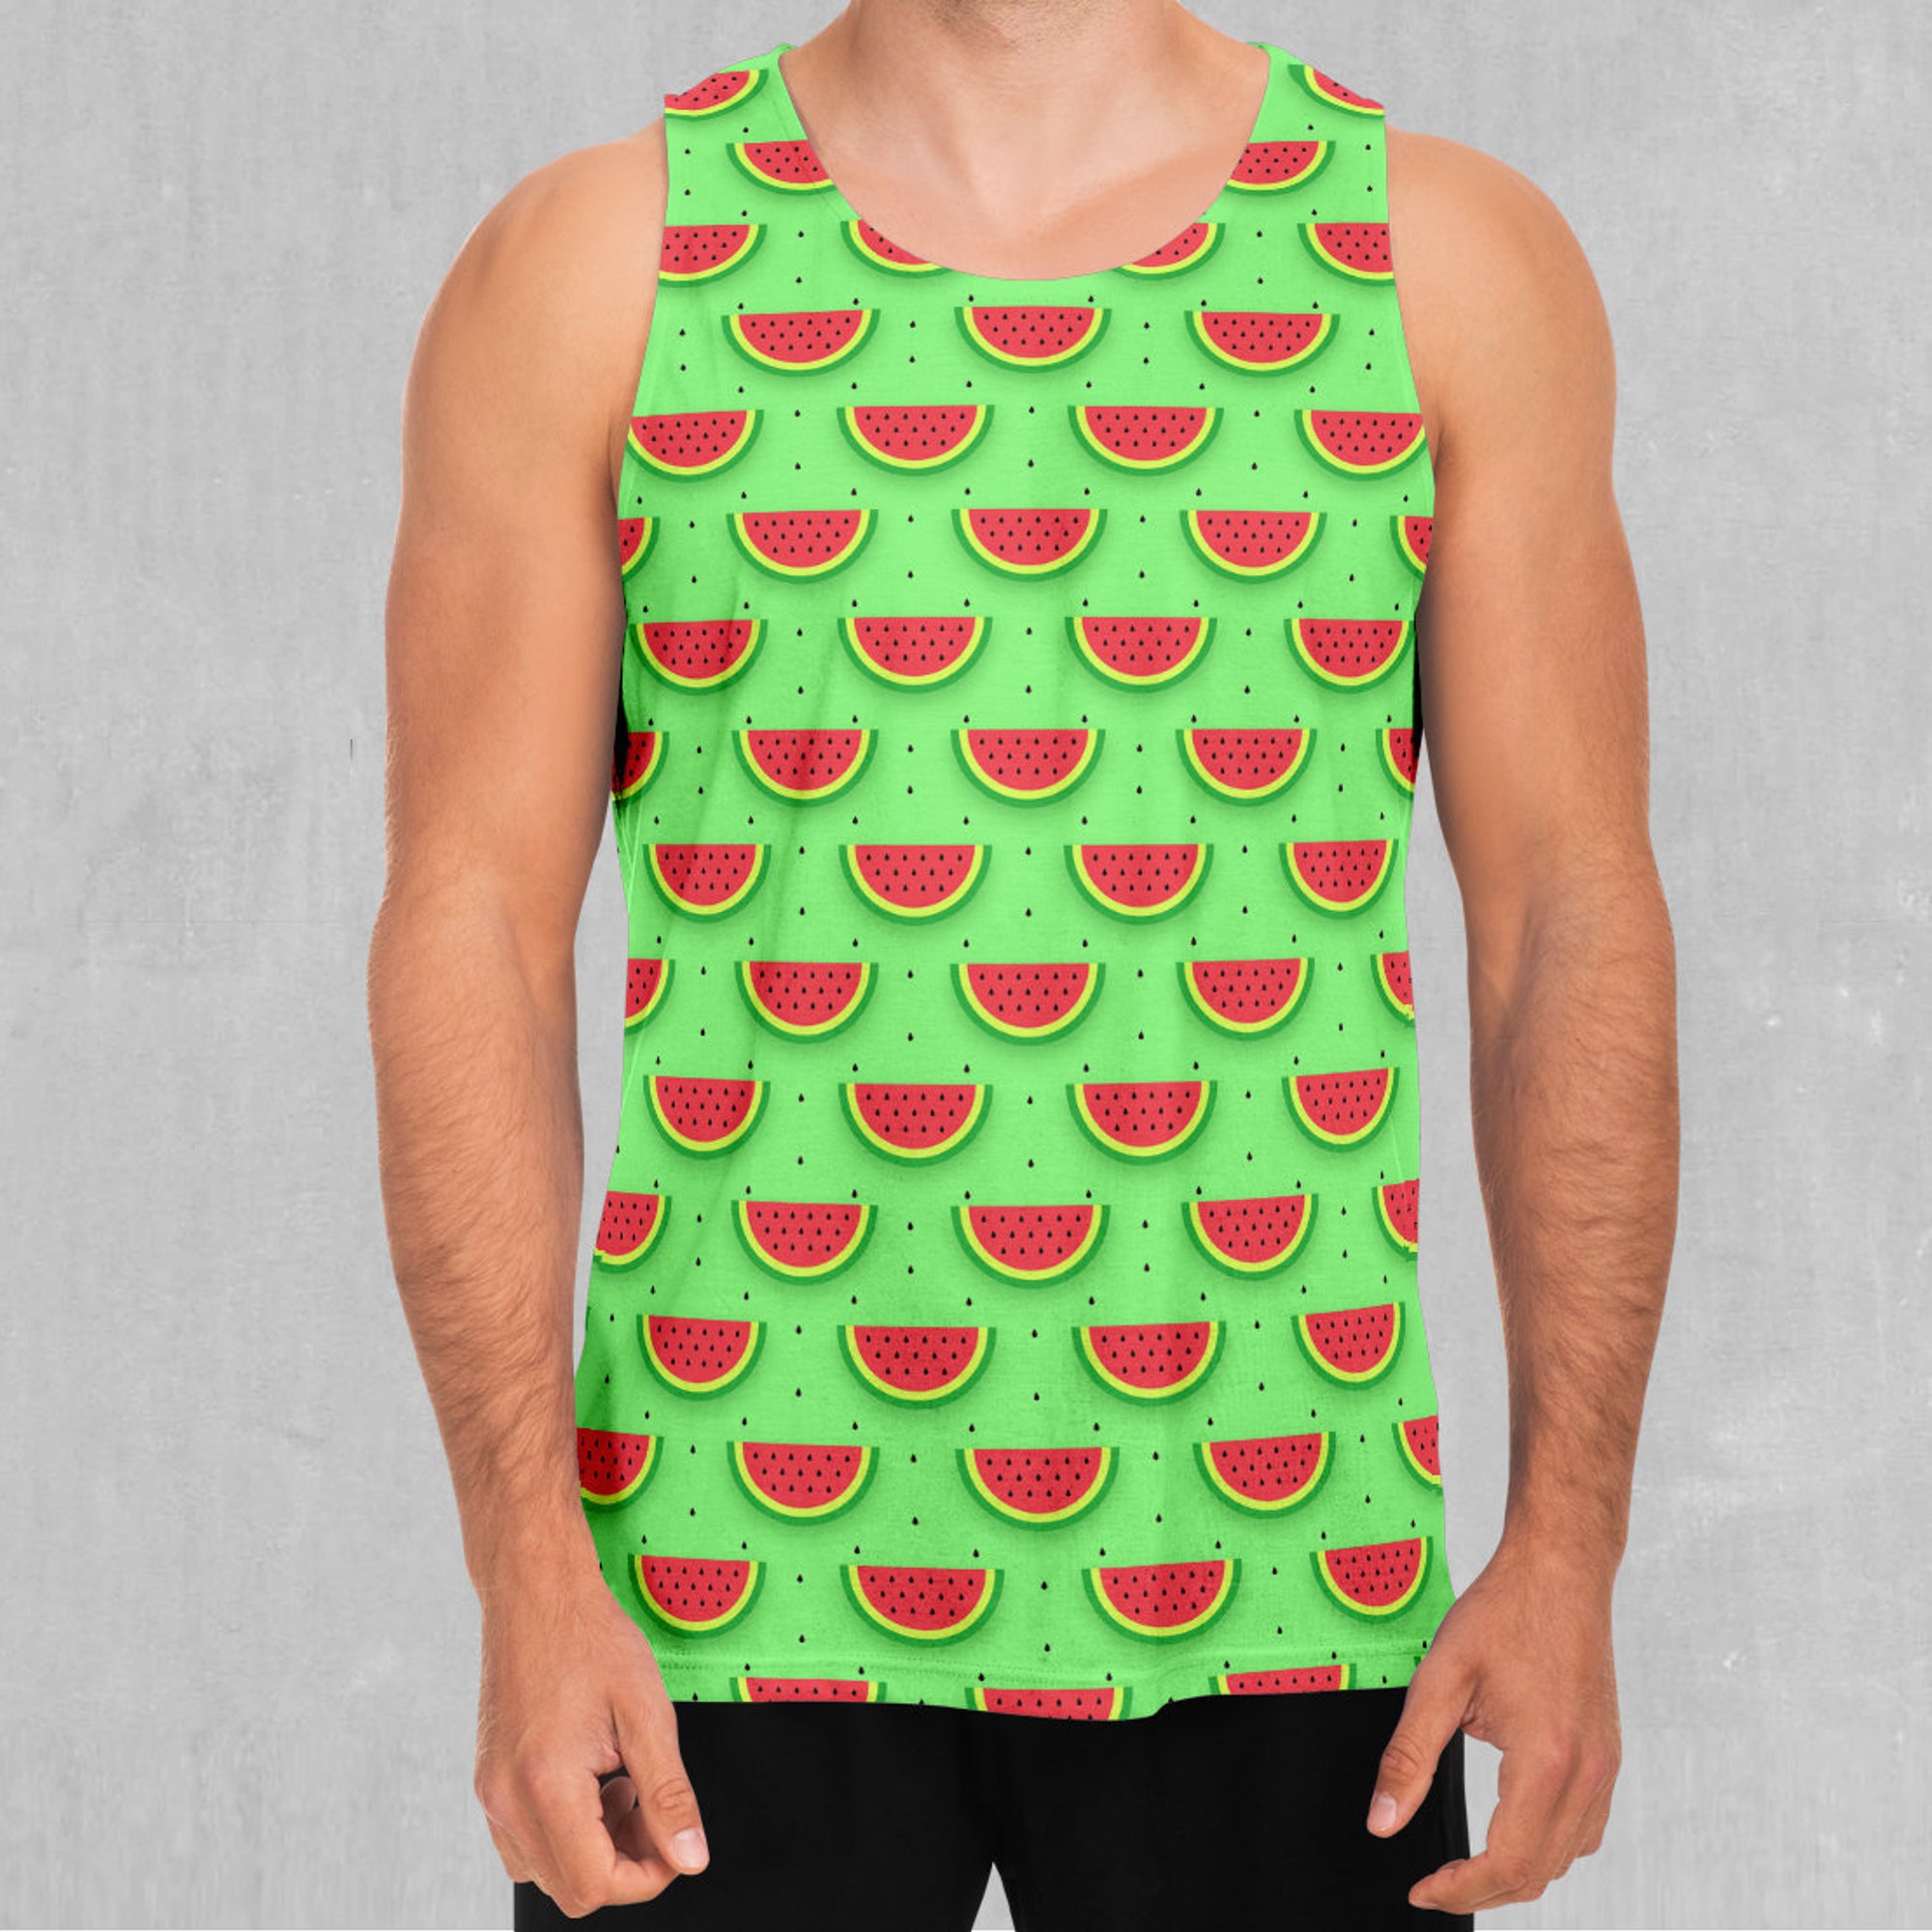 Watermelon Pattern Men's Tank Top Muscle Sleeveless Shirt